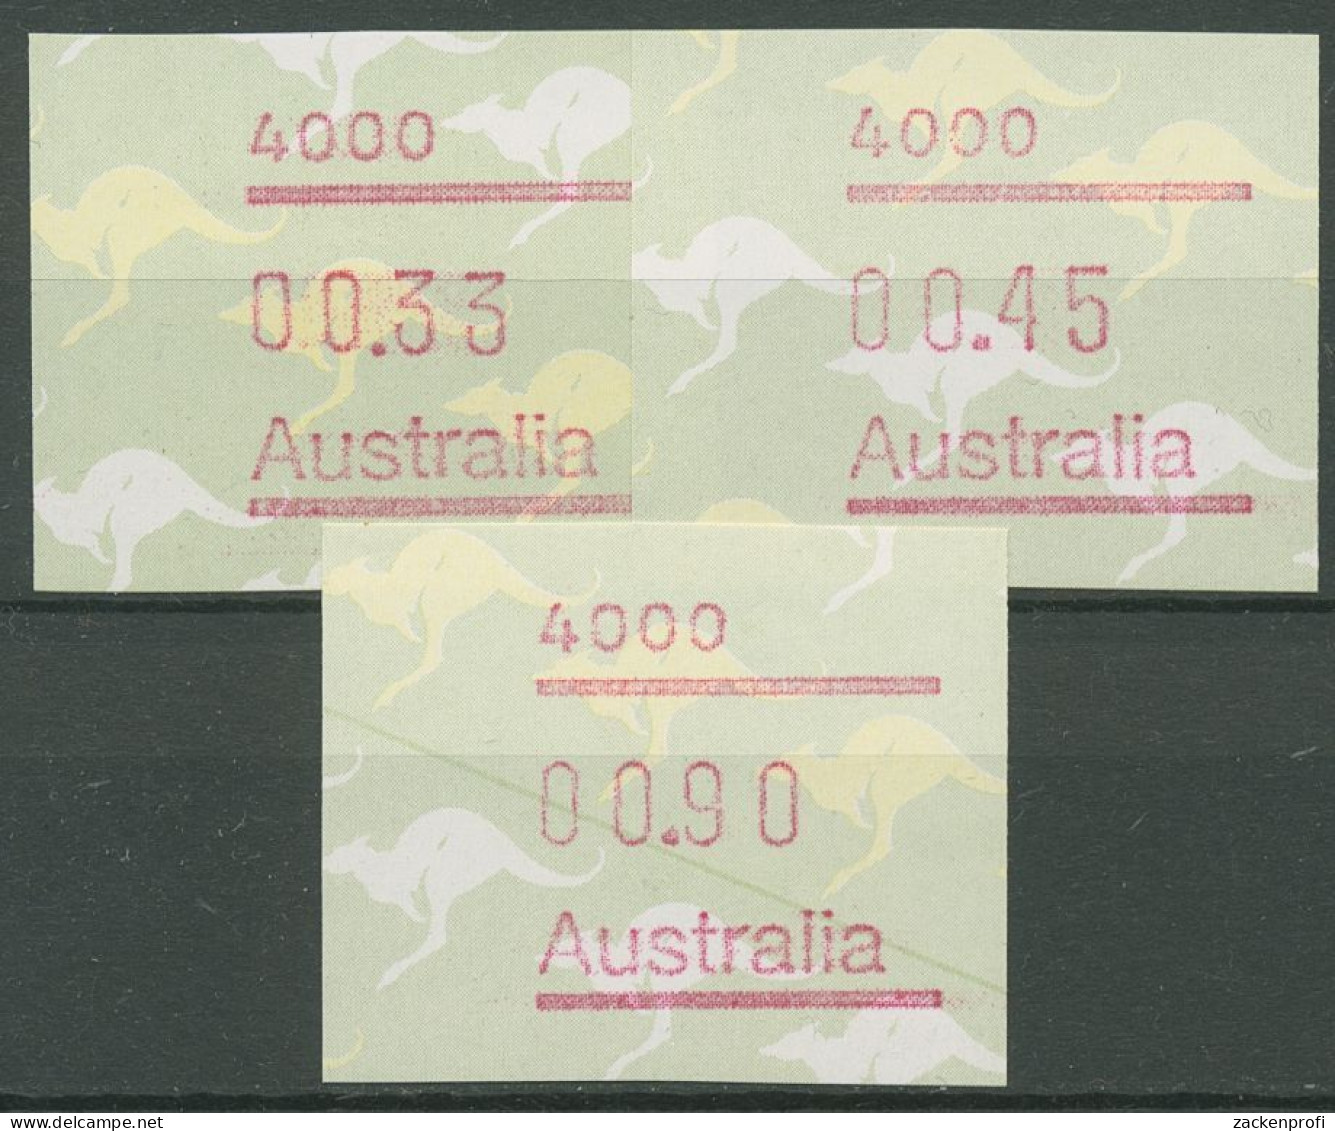 Australien 1985 Känguruh Tastensatz Automatenmarke 4 S1, 4000 Postfrisch - Viñetas De Franqueo [ATM]